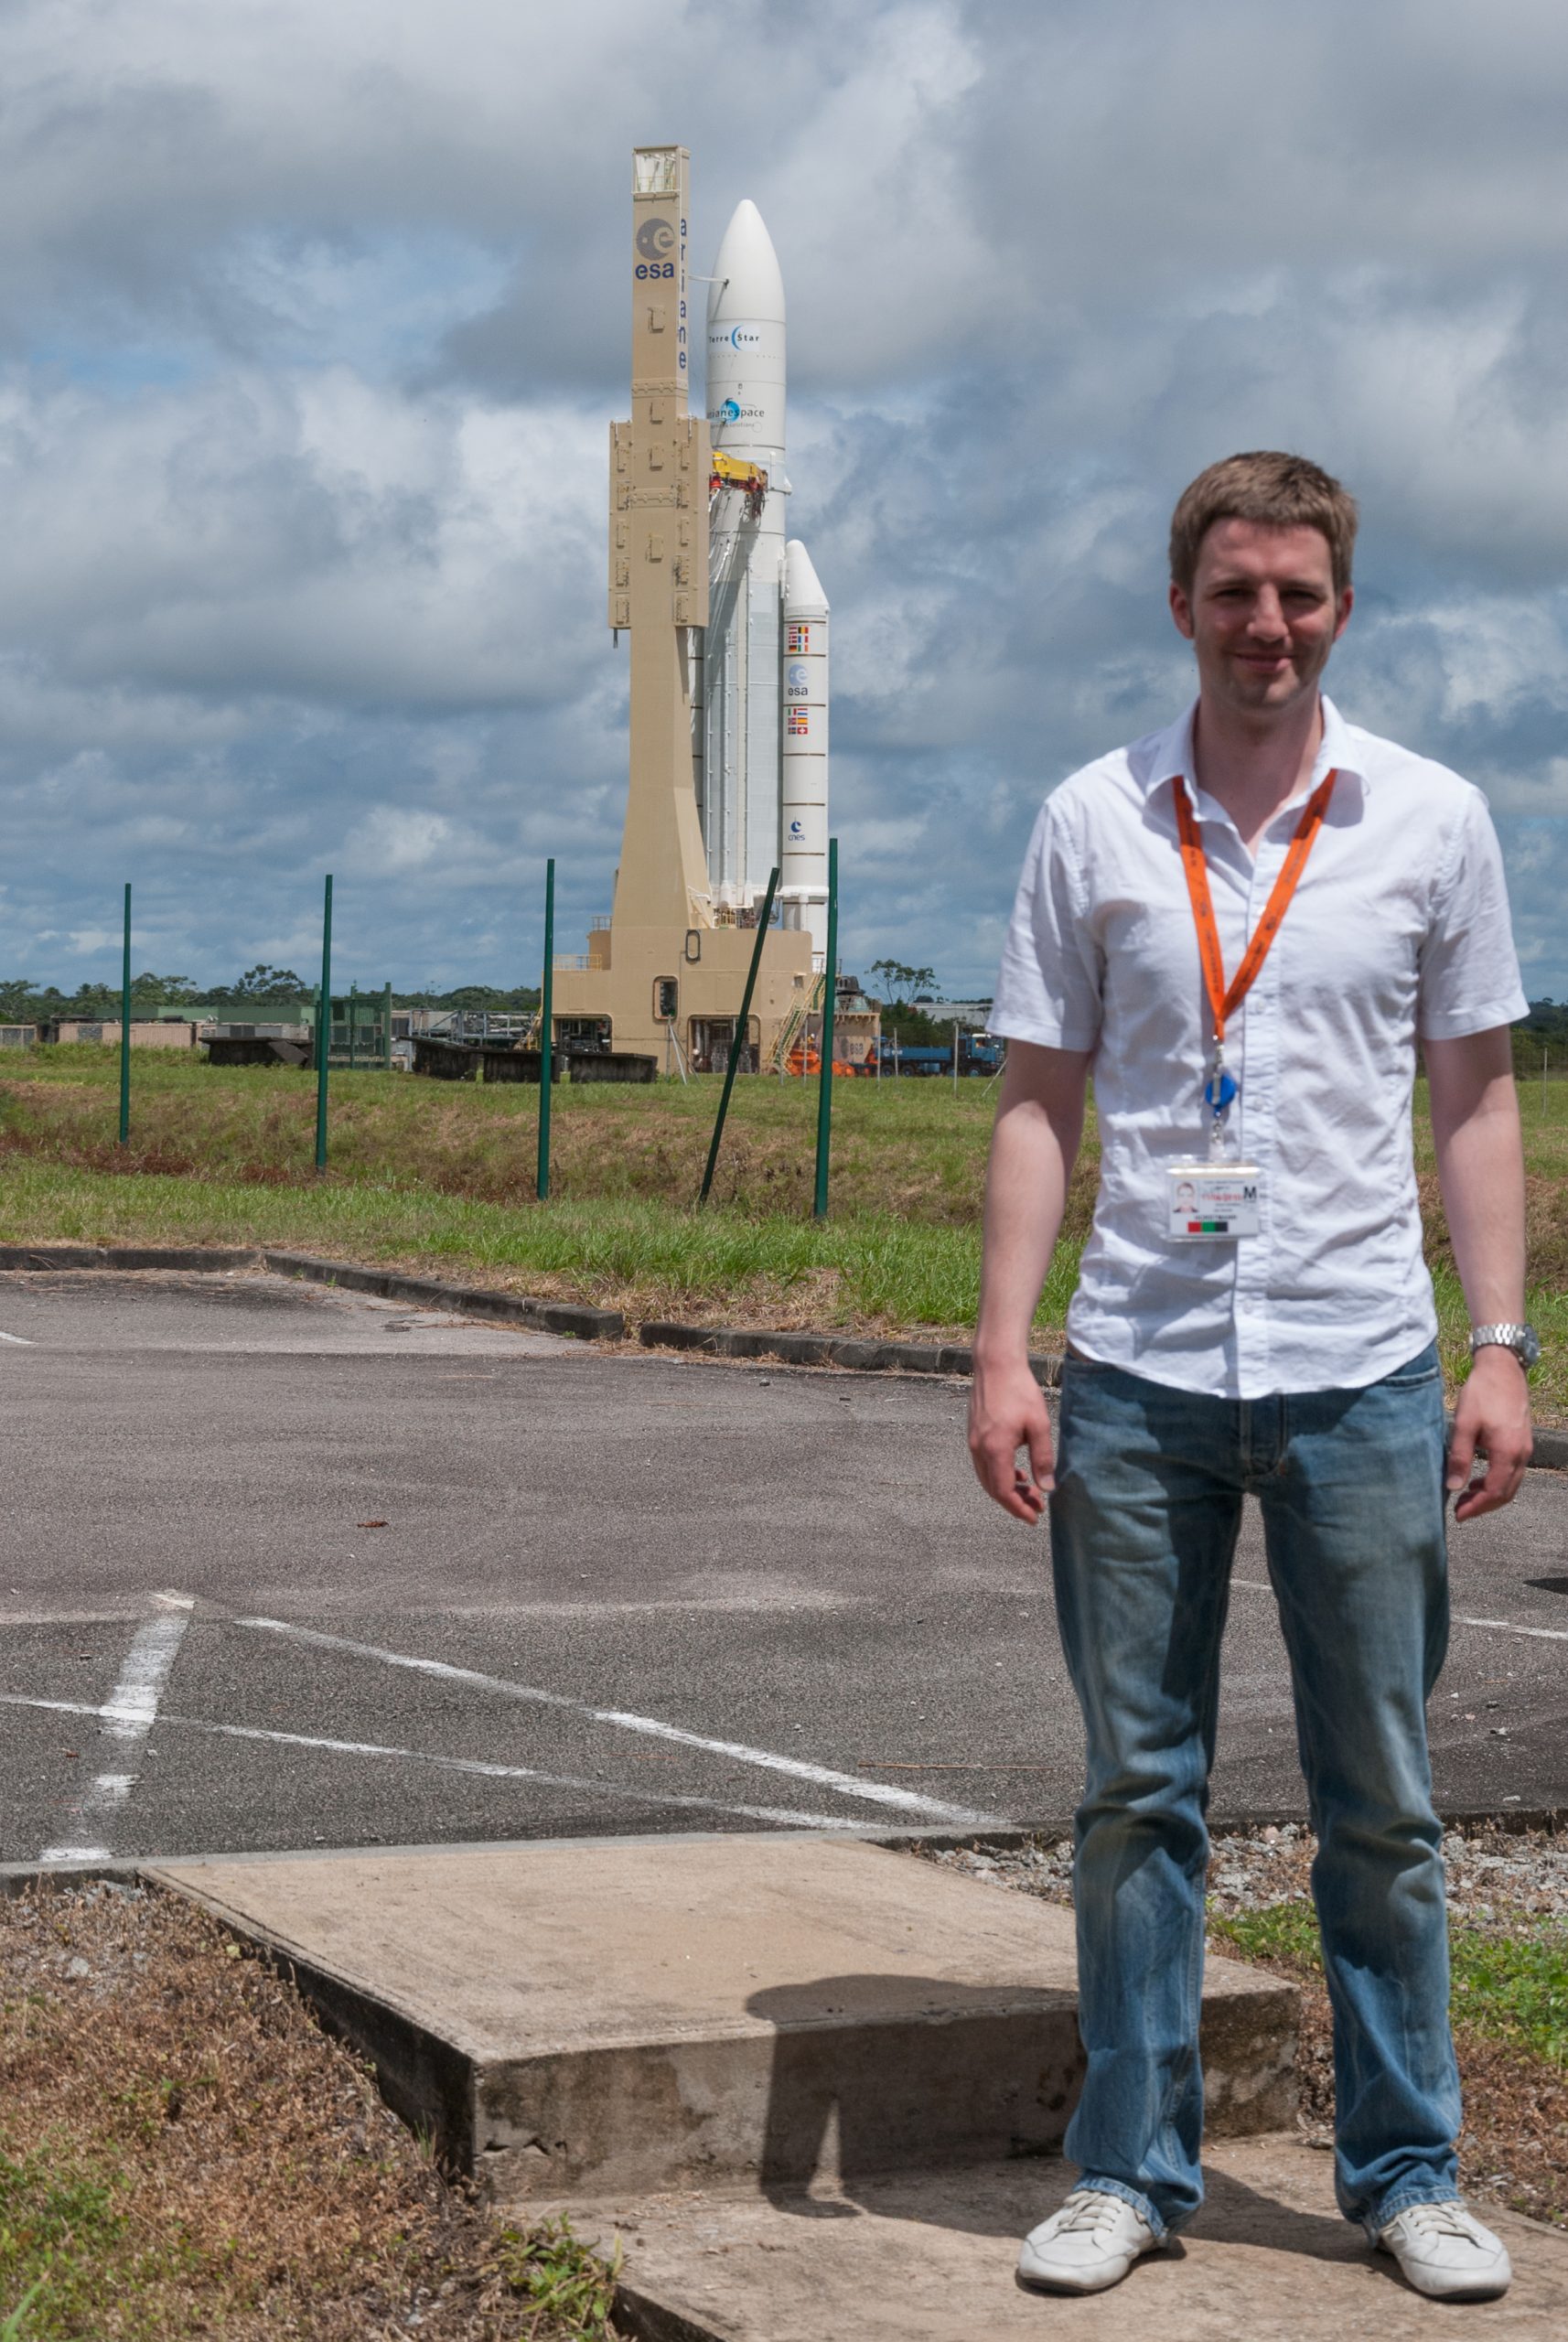 Ariane 5 rocket at Europe's spaceport in Kourou, French Guiana. Credit: Jan-Henrik Horstmann